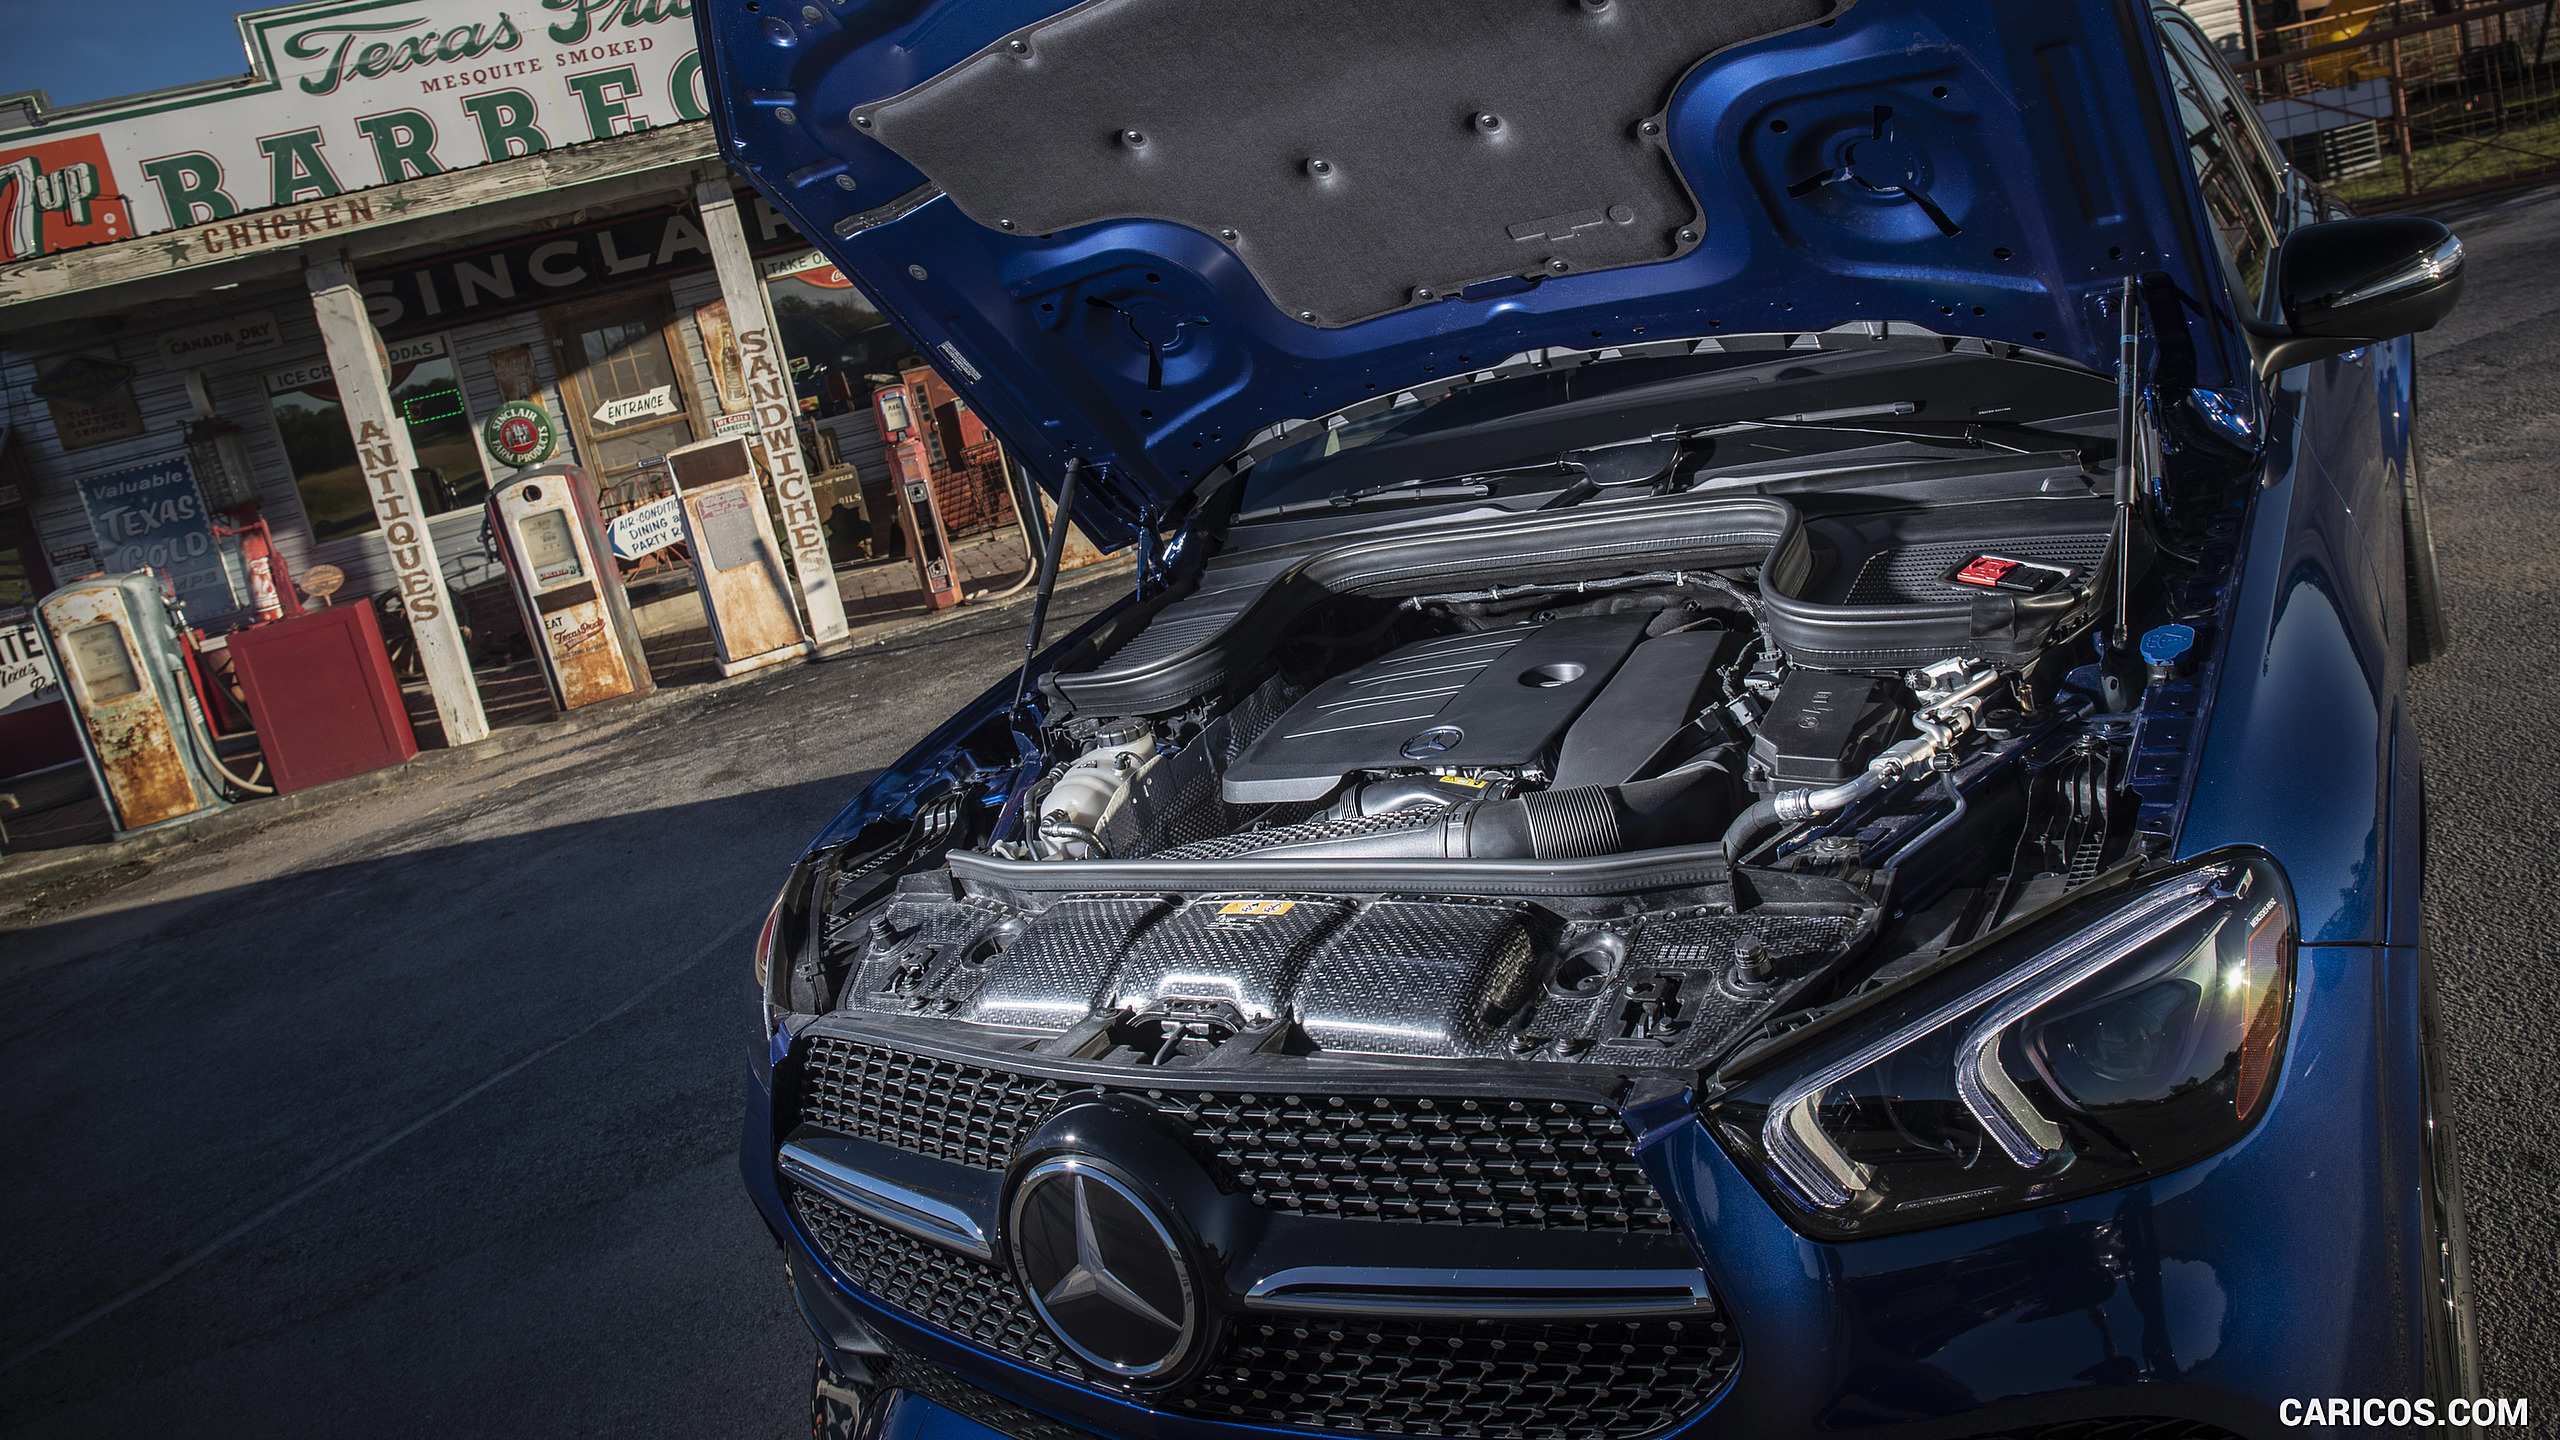 2020 Mercedes-Benz GLE 350 4MATIC (Color: Brilliant Blue; US-Spec) - Engine, #232 of 358